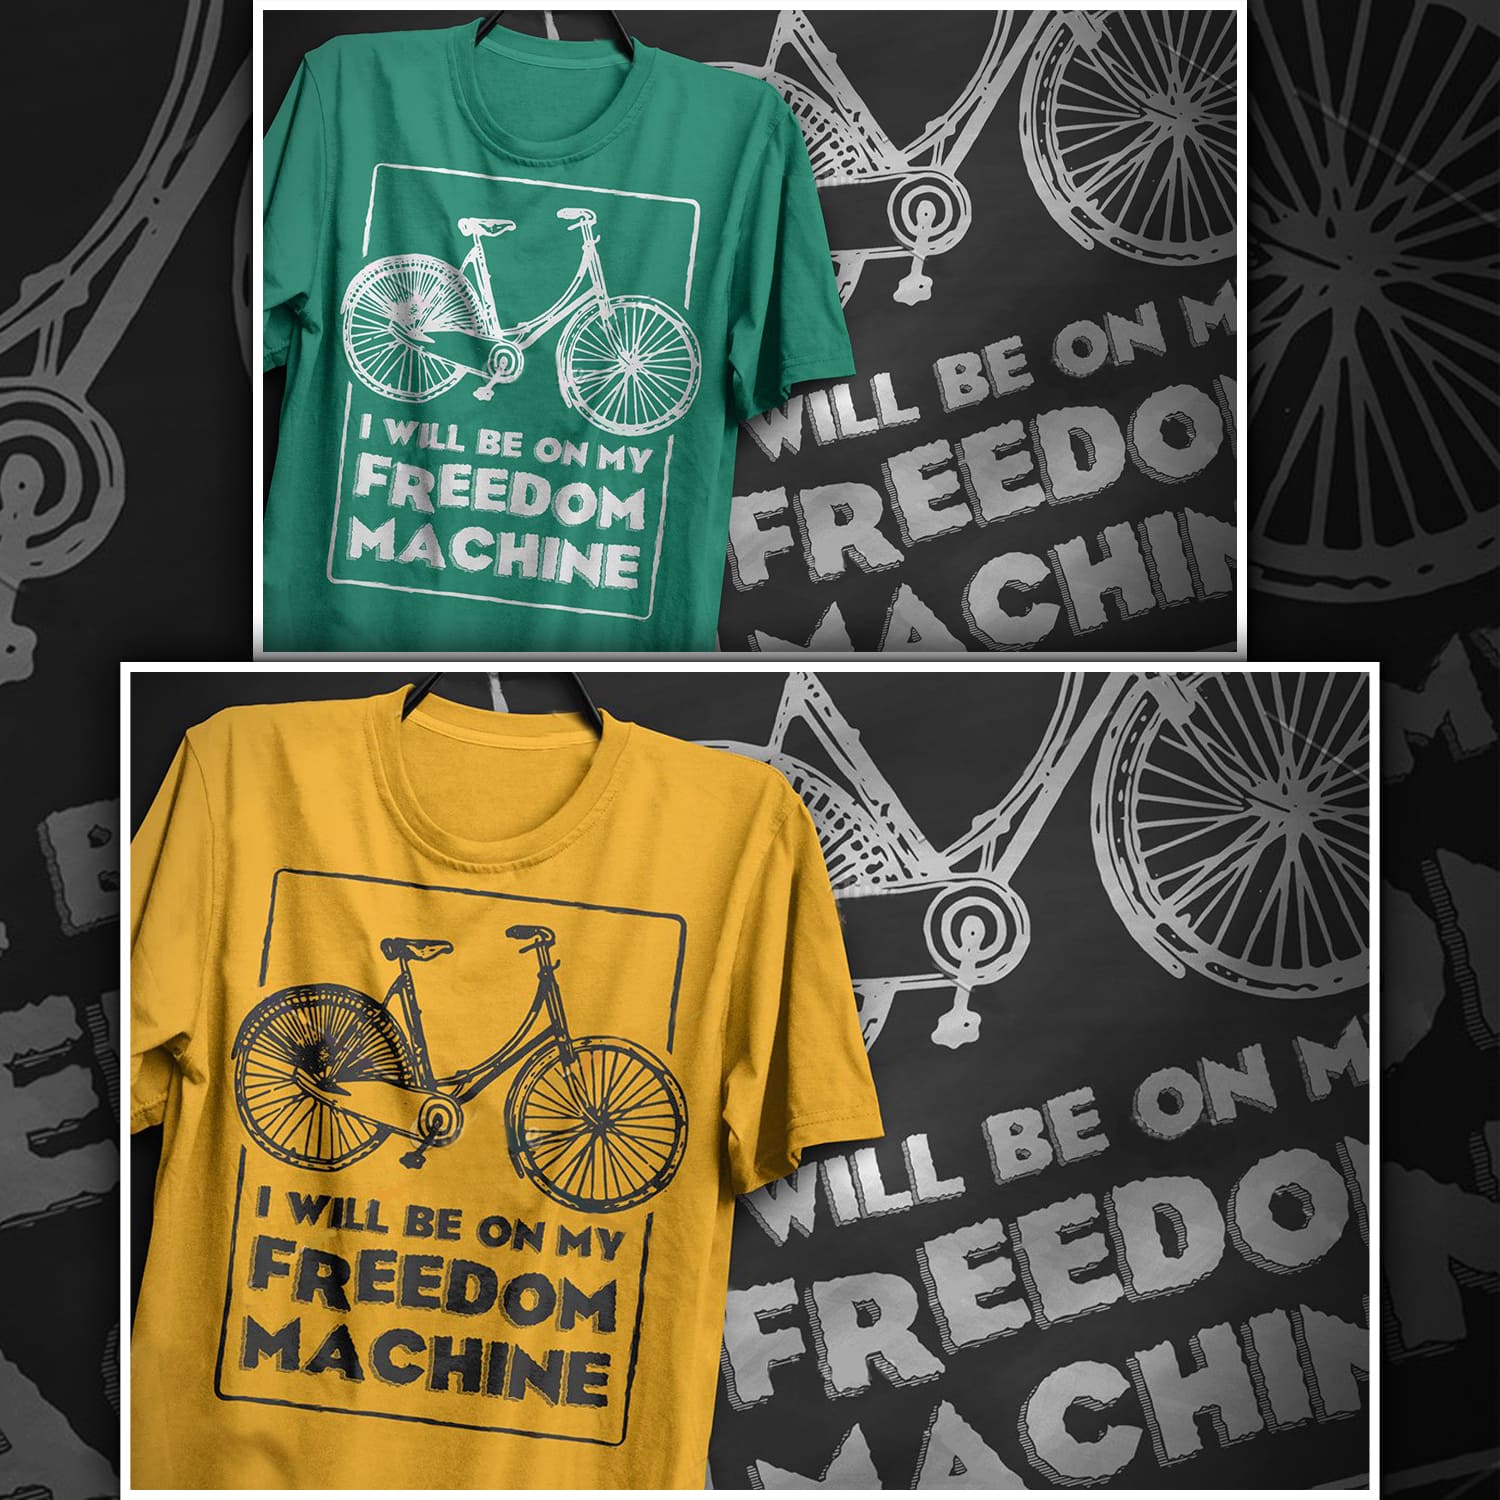 Freedom machine - T-Shirt Design.